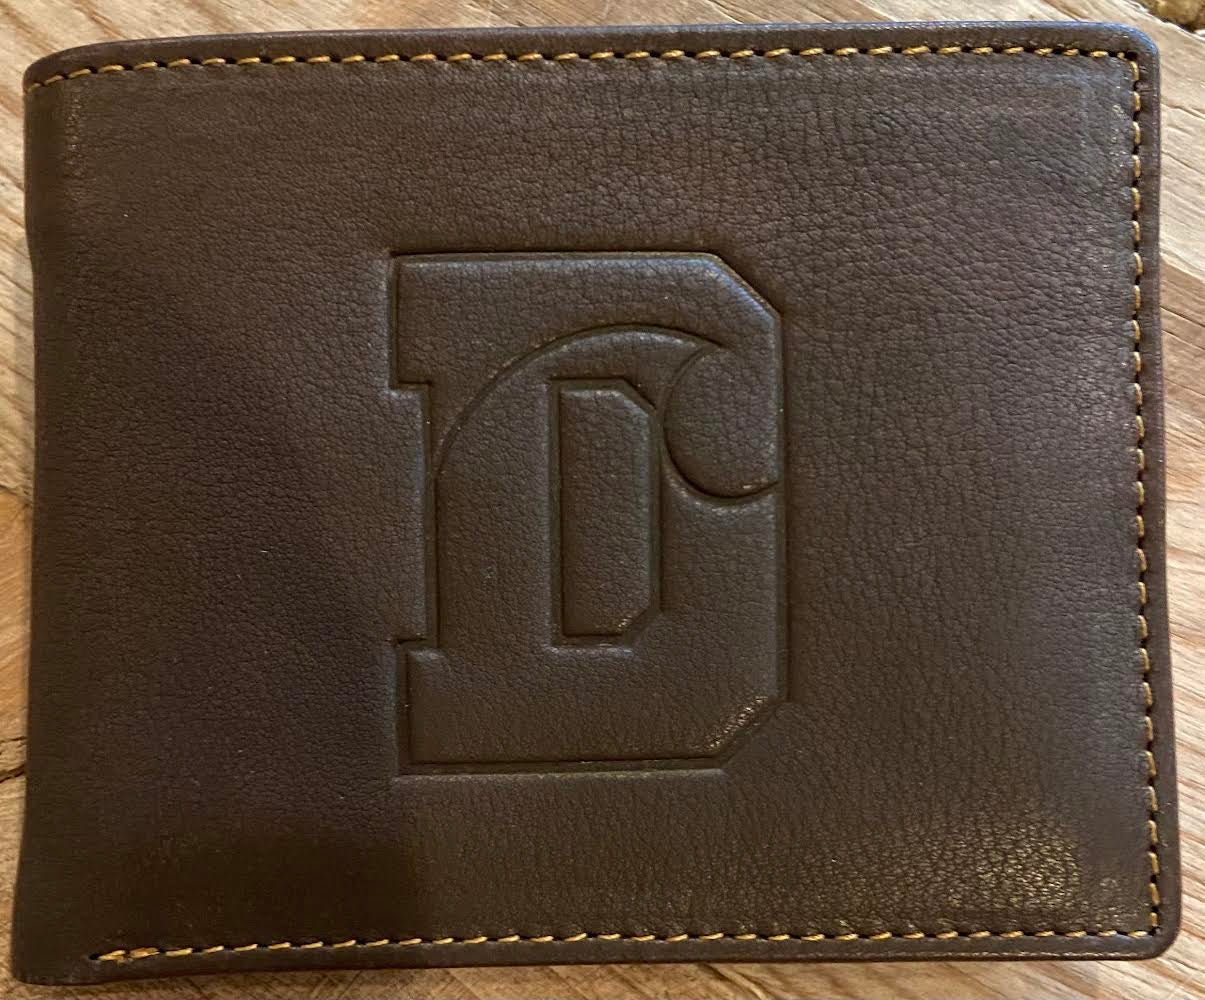 Wallet - DWave Leather Billfold - Brown